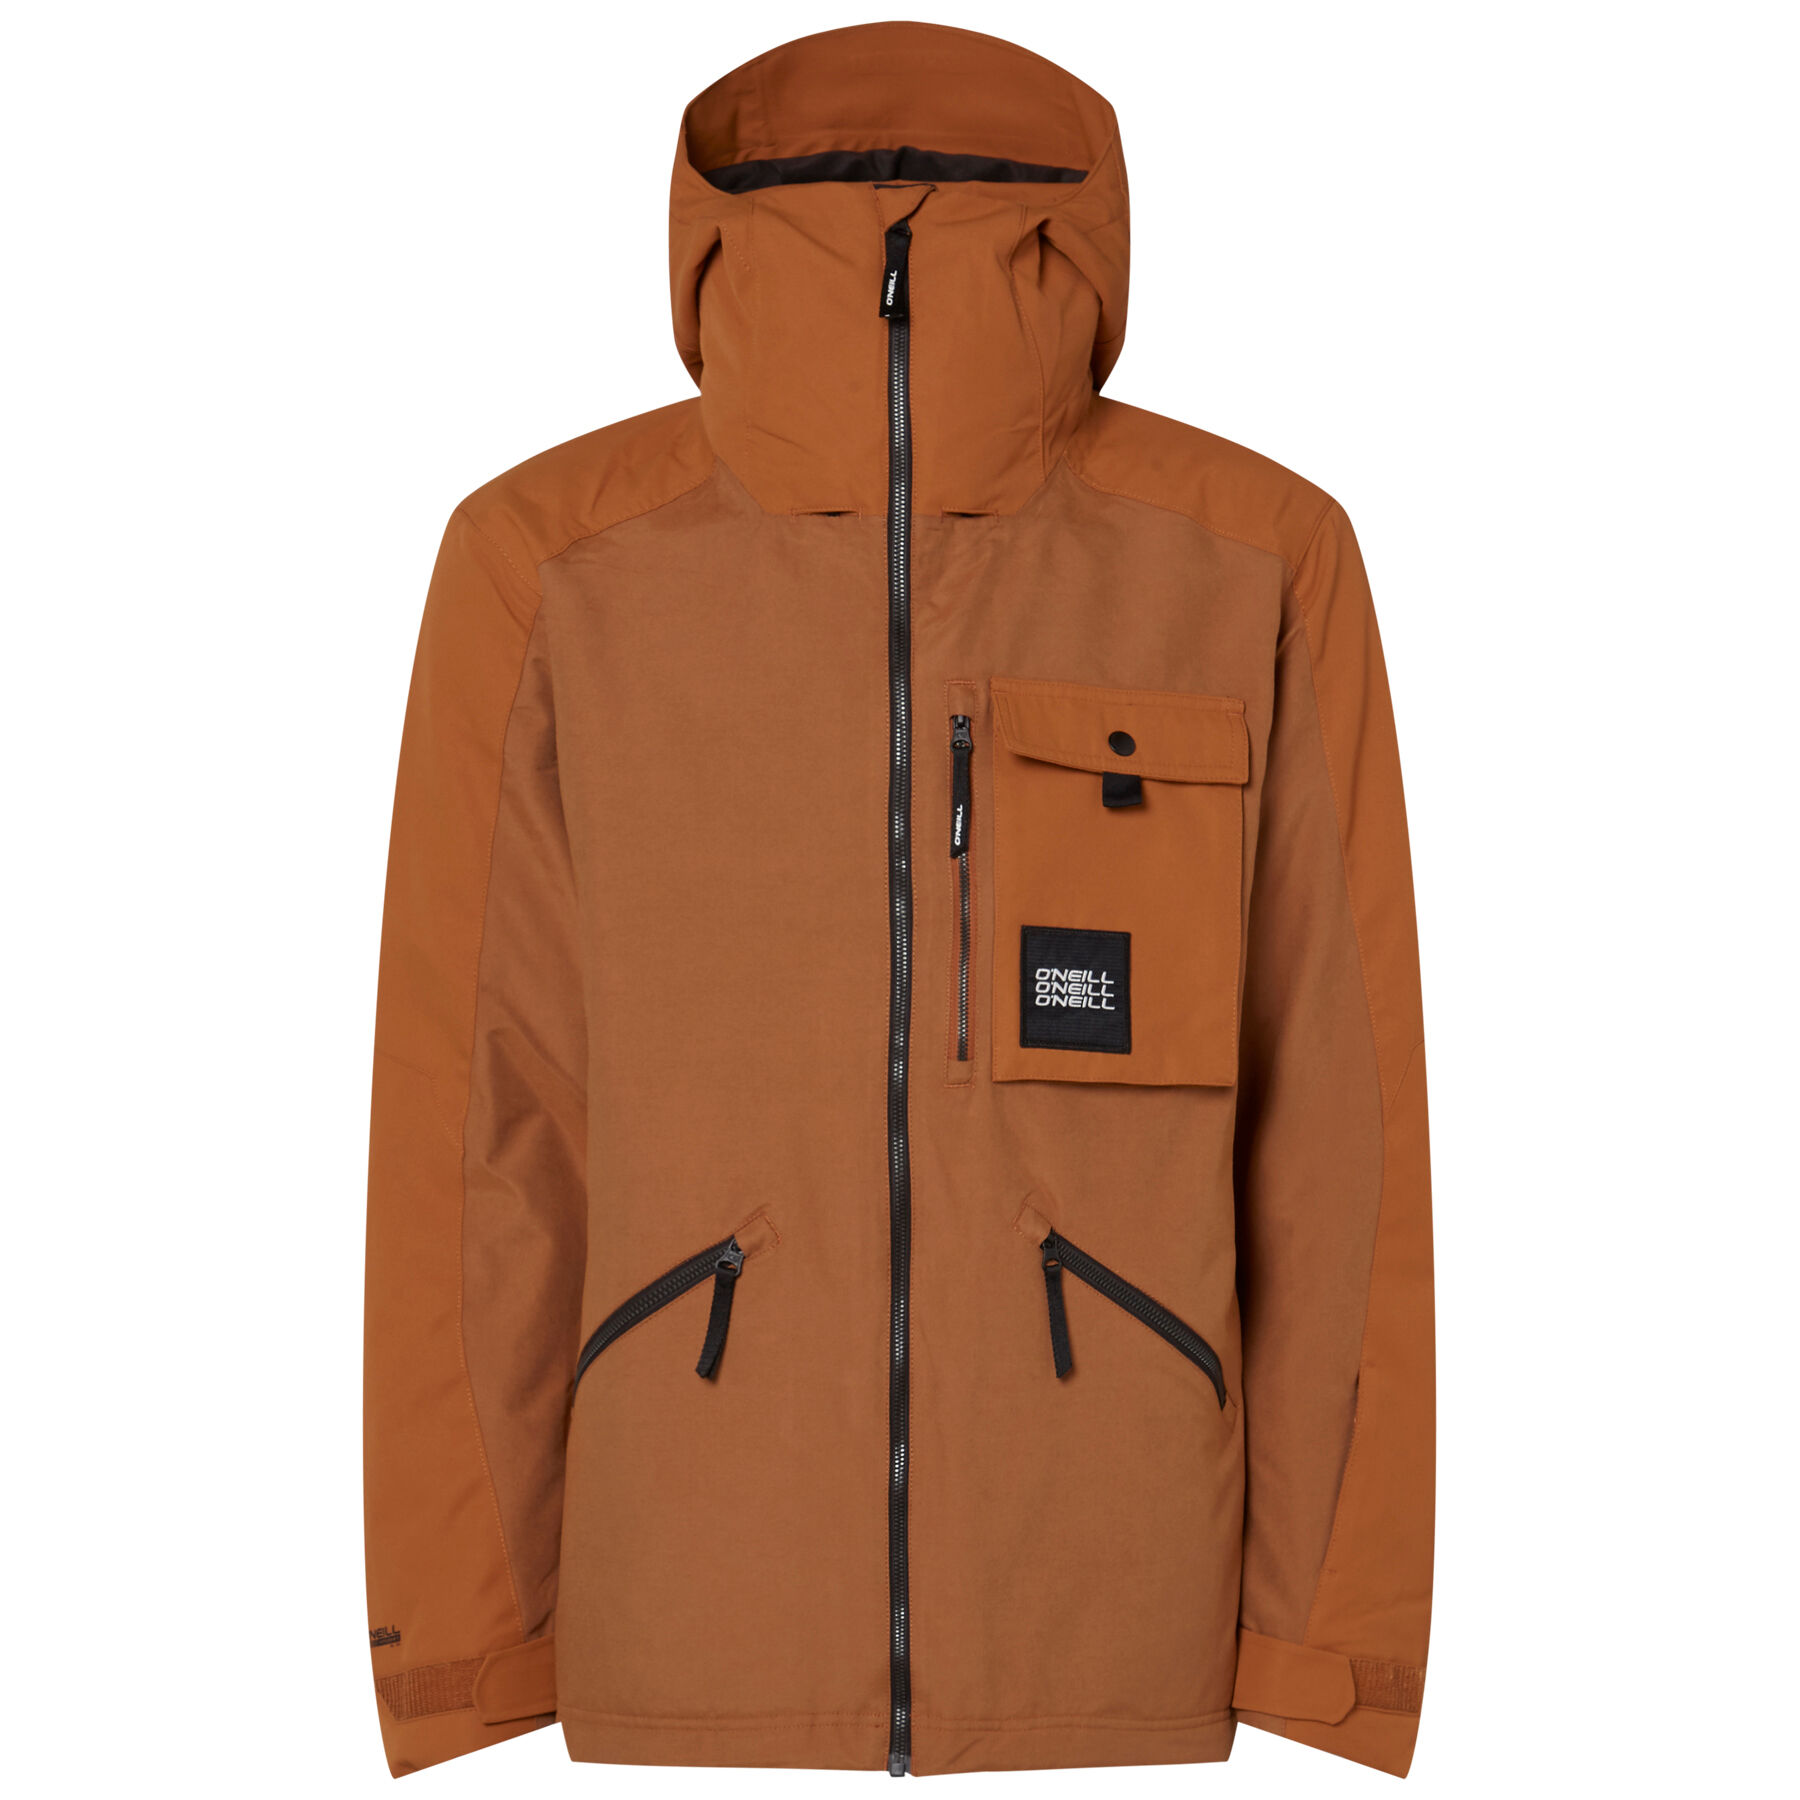 O'Neill Utility Jacket - Ski jacket - Men's